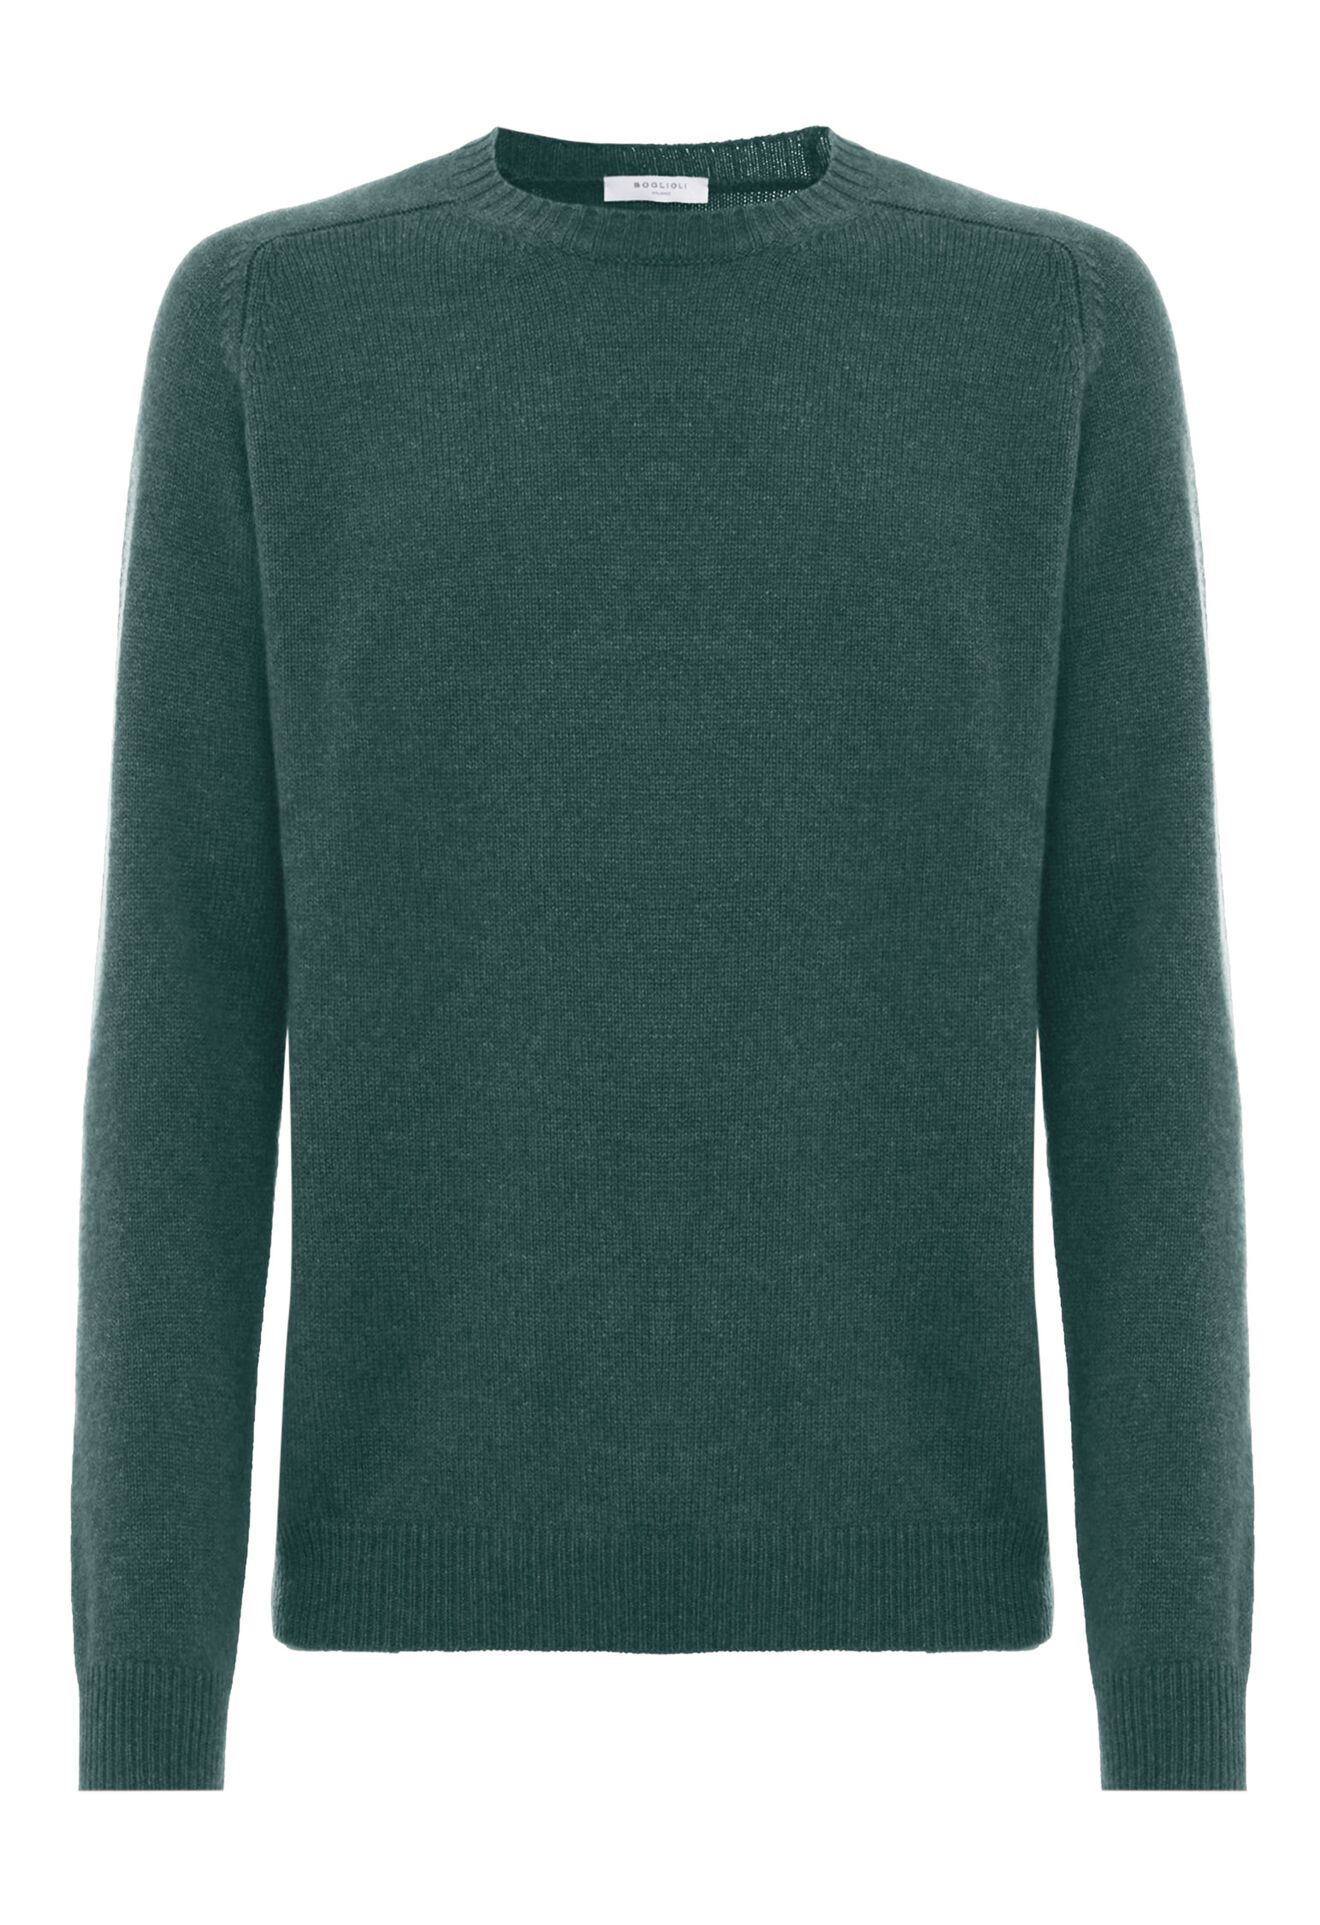 Pure cashmere crewneck sweater in Green: Luxury Italian Knitwear